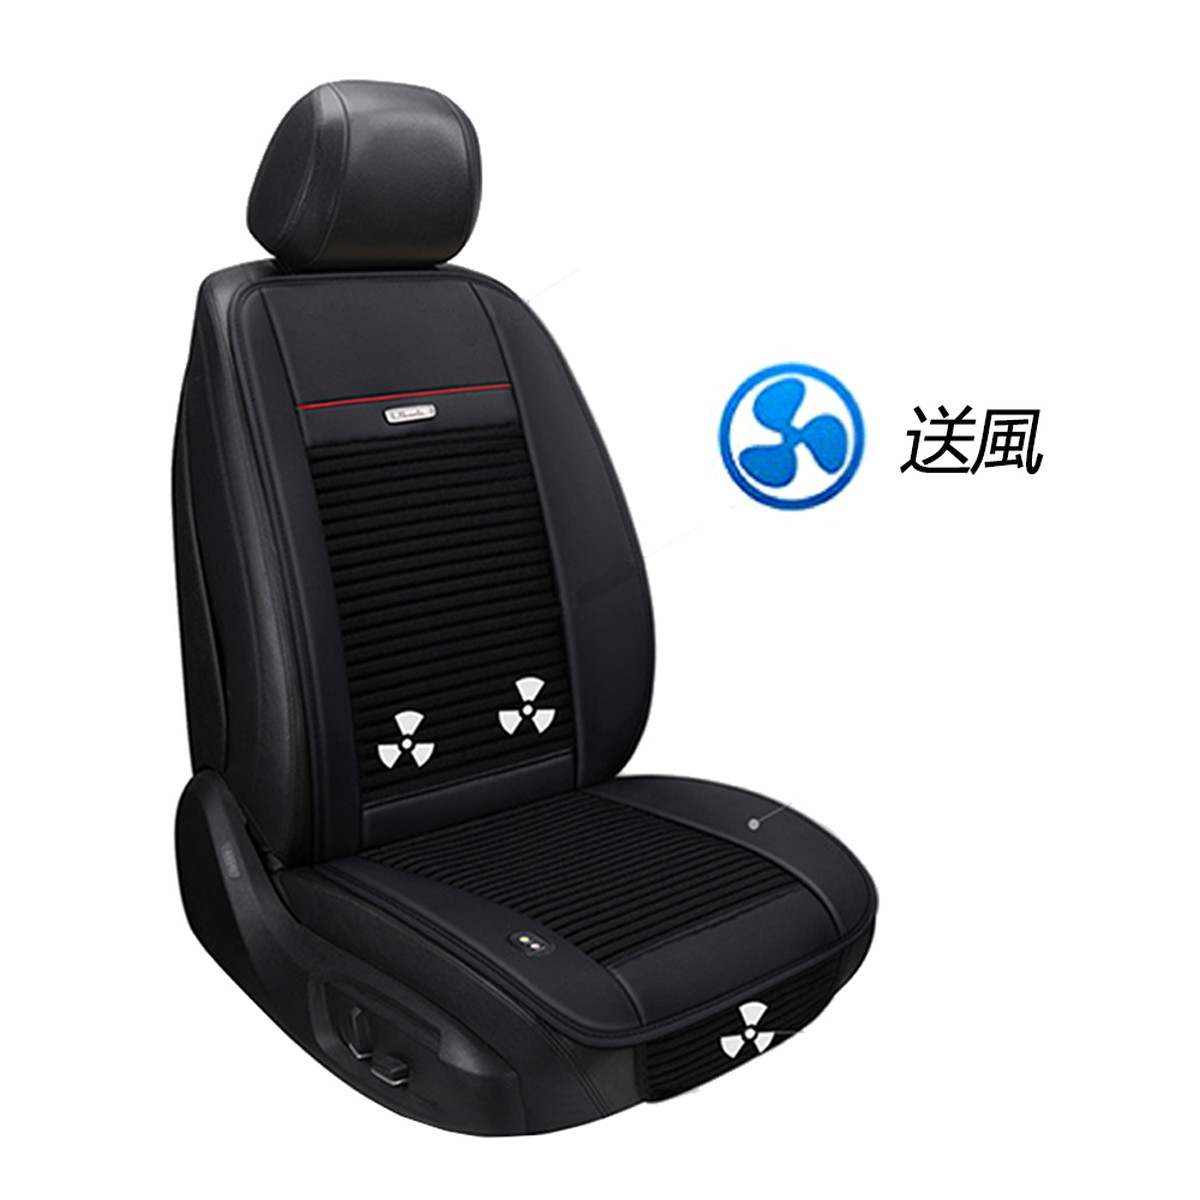 Raku 正規品 カーシート 車シート 冷却 送風 12v 3個強力ファン クールシート シートクッション 車載クッション 日本語説明書付き えびすーjapan